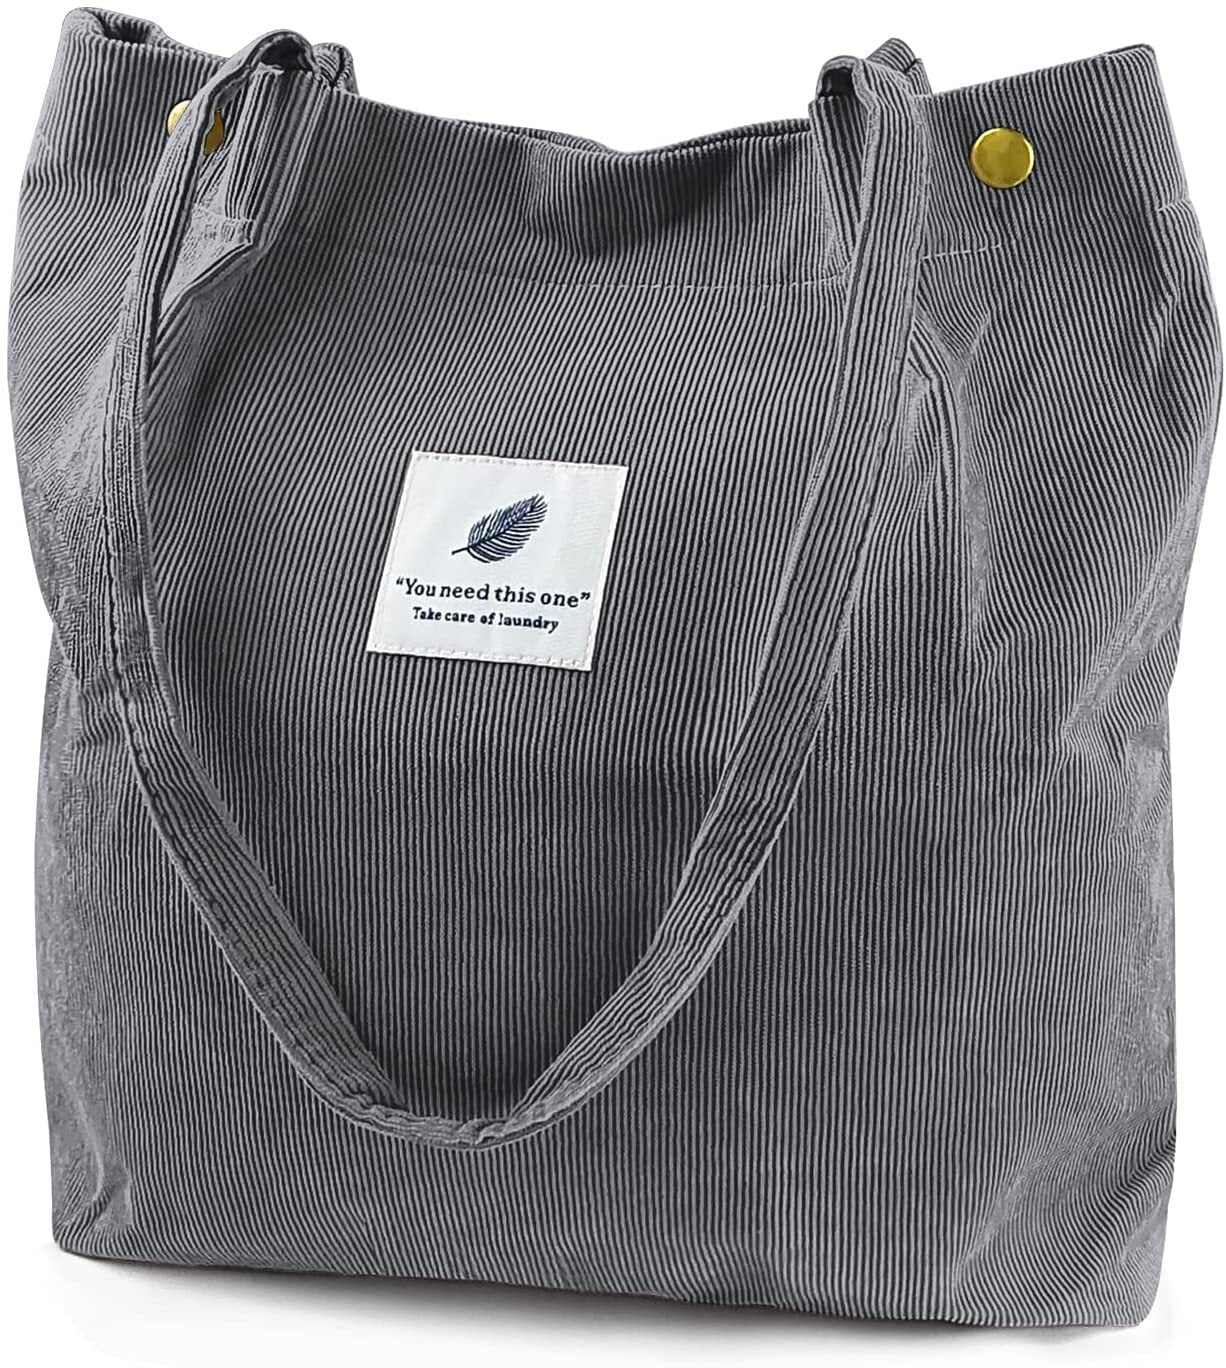 JXDXHCW White Polka Dot Canvas Tote Bags for Women Girls Work Travel  Shopping, Black Large Purse Reusable Grocery Handbag with Zip Pocket  Shoulder Bag